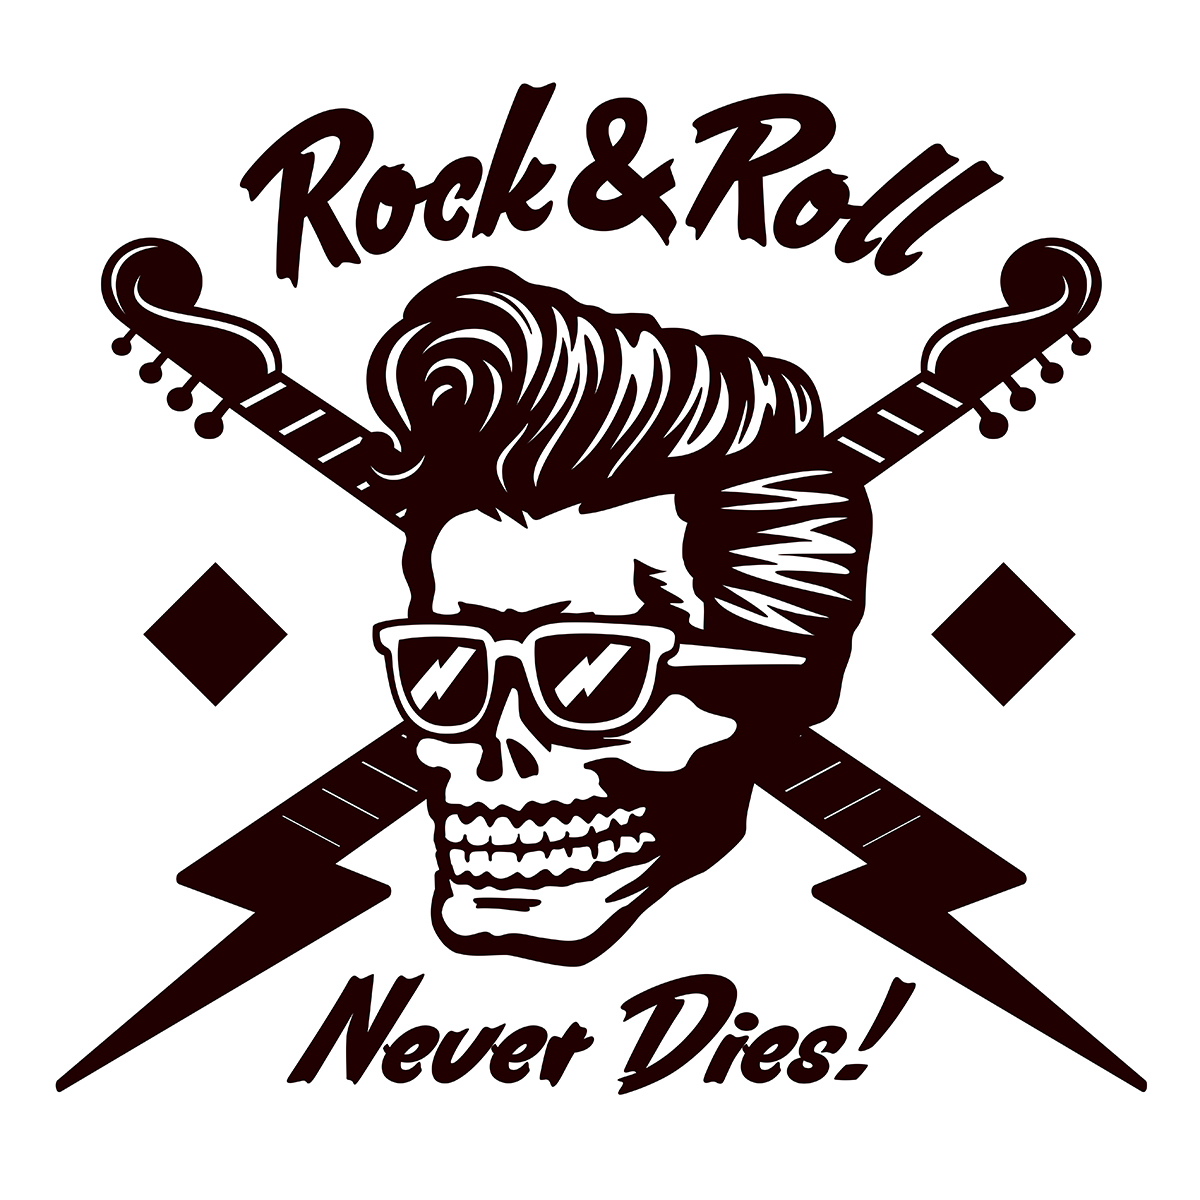 Remember - Rock & Roll Never Dies! (SIC) - Bild: durantelallera|Shutterstock.com